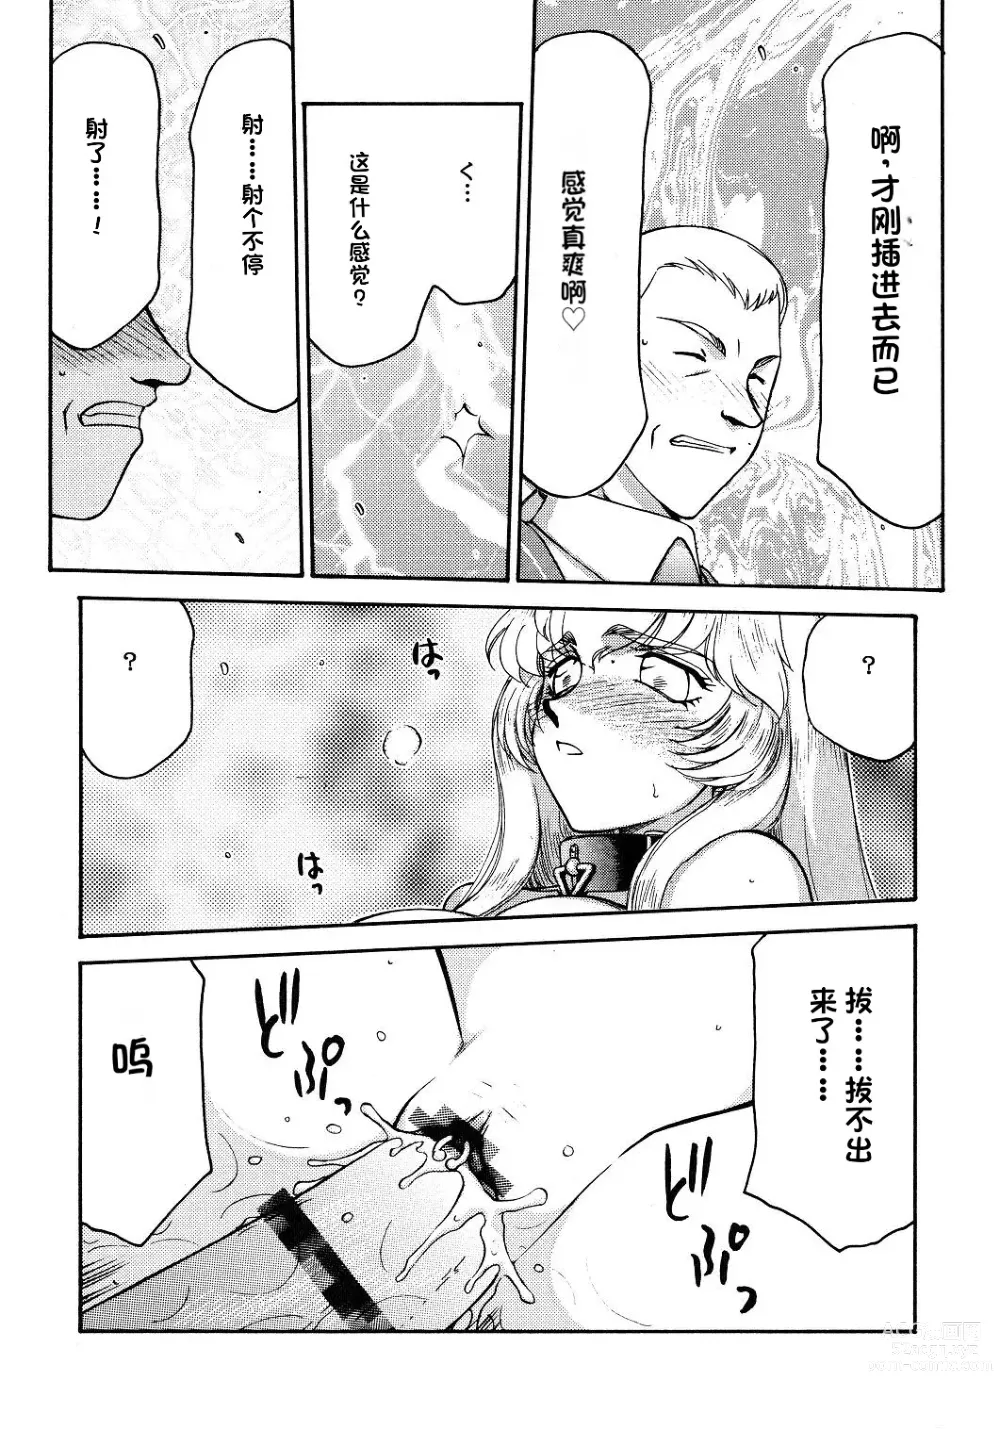 Page 150 of doujinshi NISE Dragon Blood! 9-12